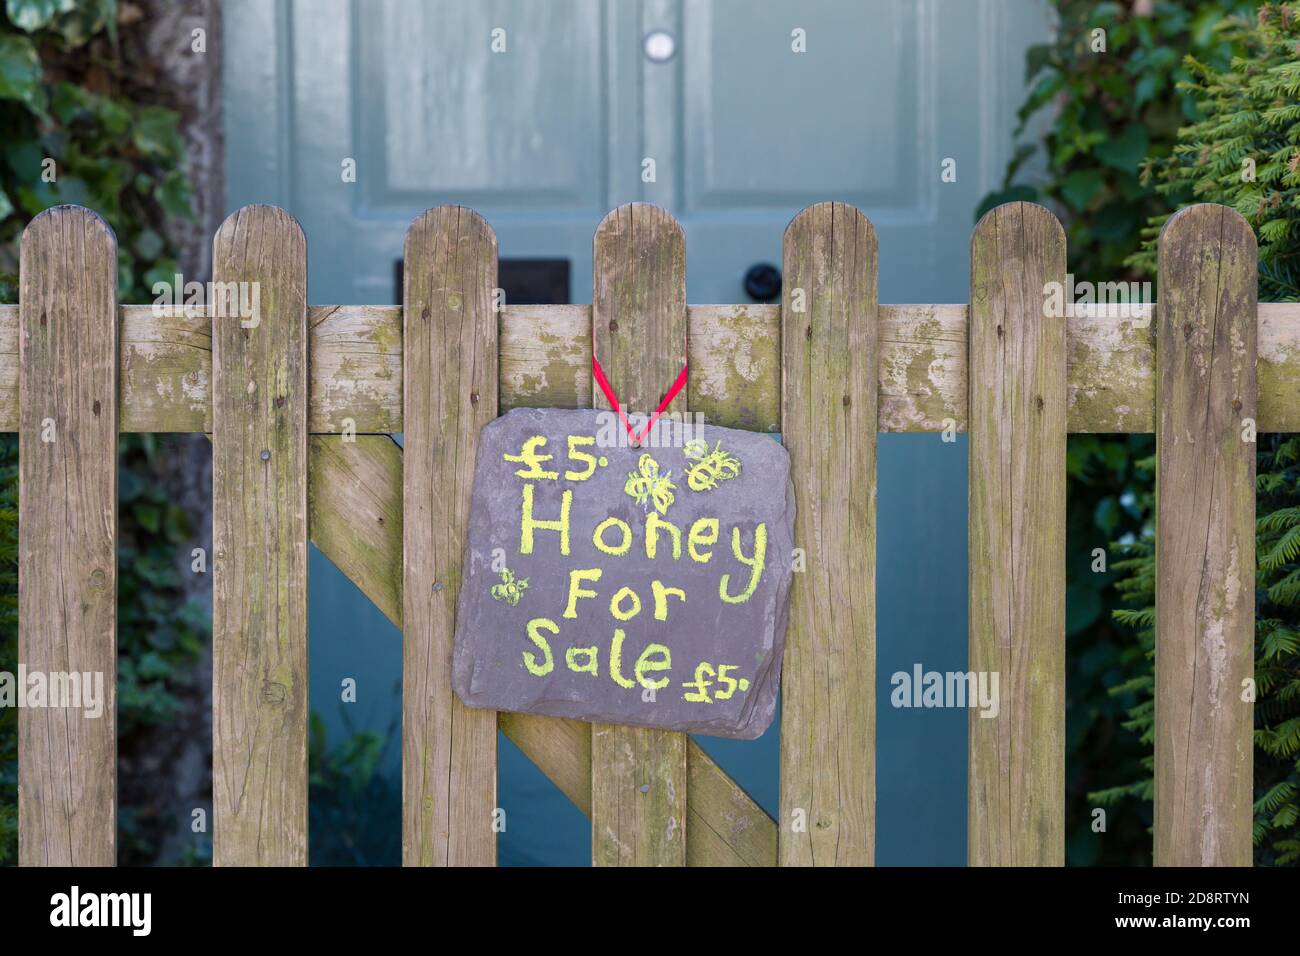 BUCKINGHAM, UK - May 25, 2020. Honey for sale sign outside a house. Home business selling fresh produce, UK Stock Photo